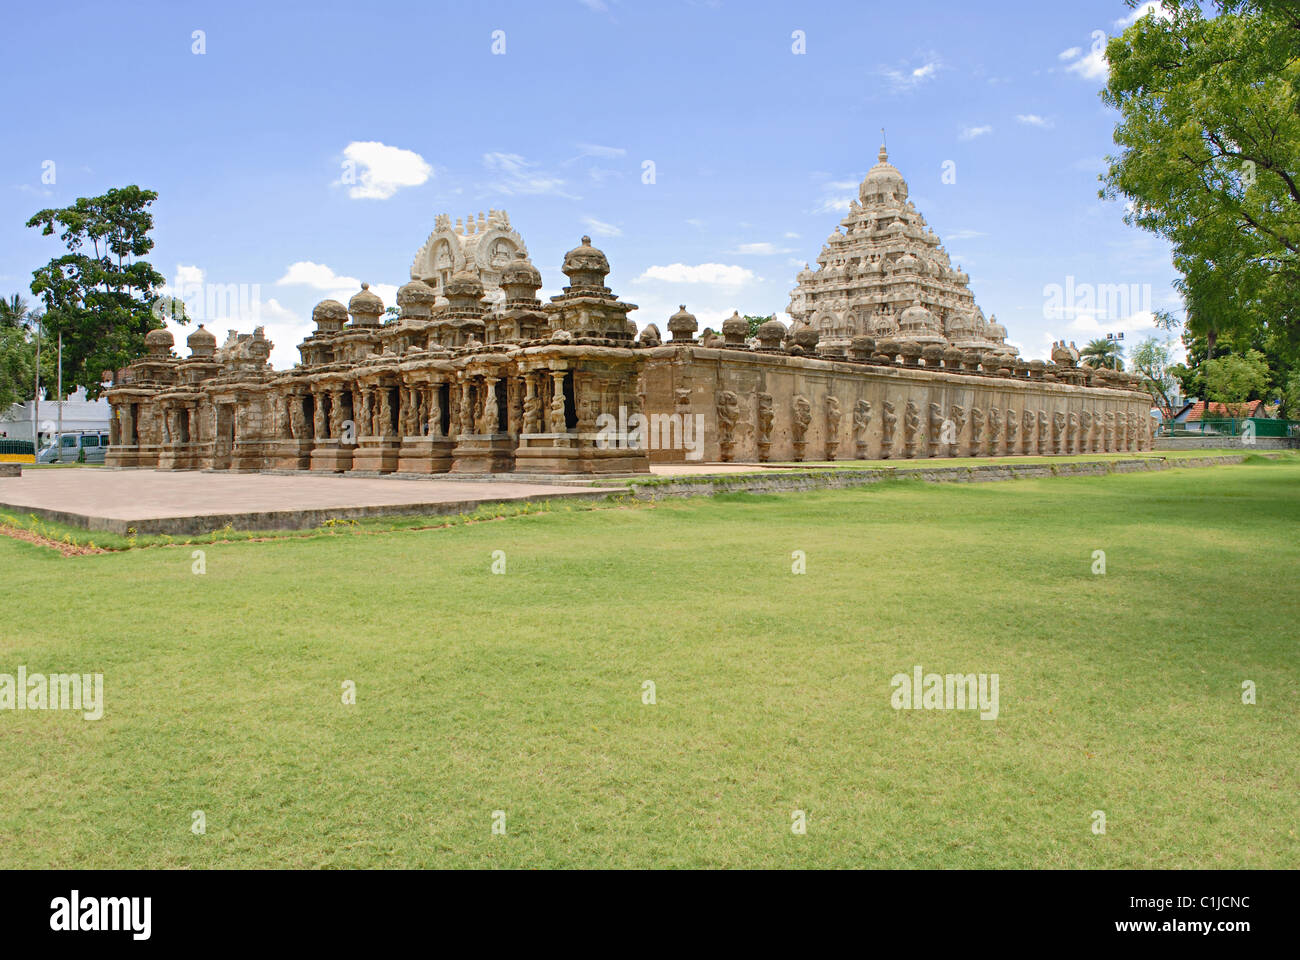 Vaikunta perumal temple, Kanchipuram,Tamilnadu, India.  It is one of the 108 Divya Desam dedicated to the Lord Vishnu. Stock Photo